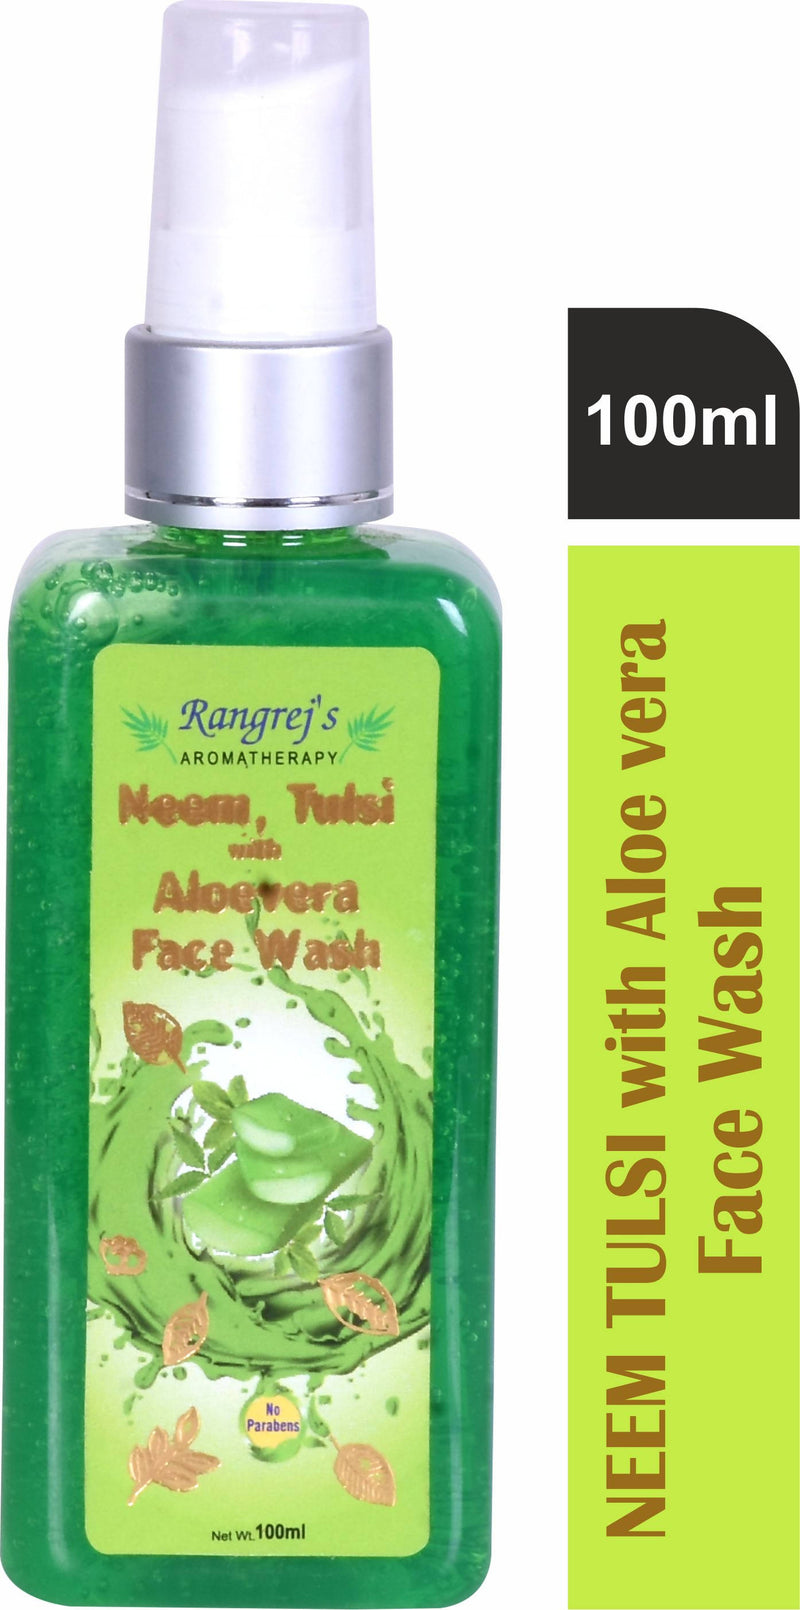 Rangrej's Aromatherapy Neem Tulsi with Aloevera Facewash